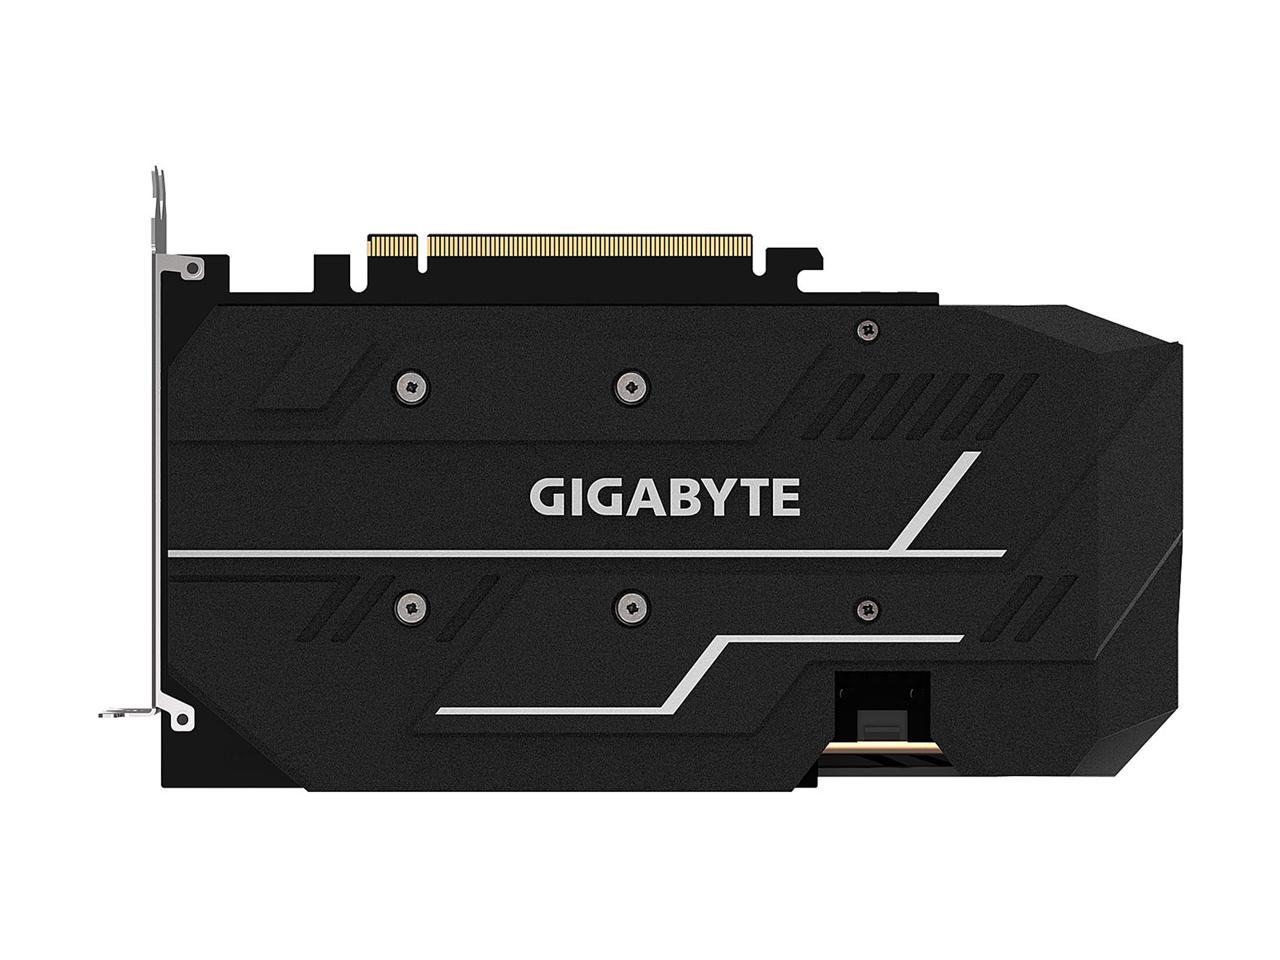 Gigabyte Geforce Rtx 2060 Oc 6G Graphics Card, 2 X Windforce Fans, 6Gb 192-Bit Gddr6, Gv-N2060Oc-6Gd Video Card